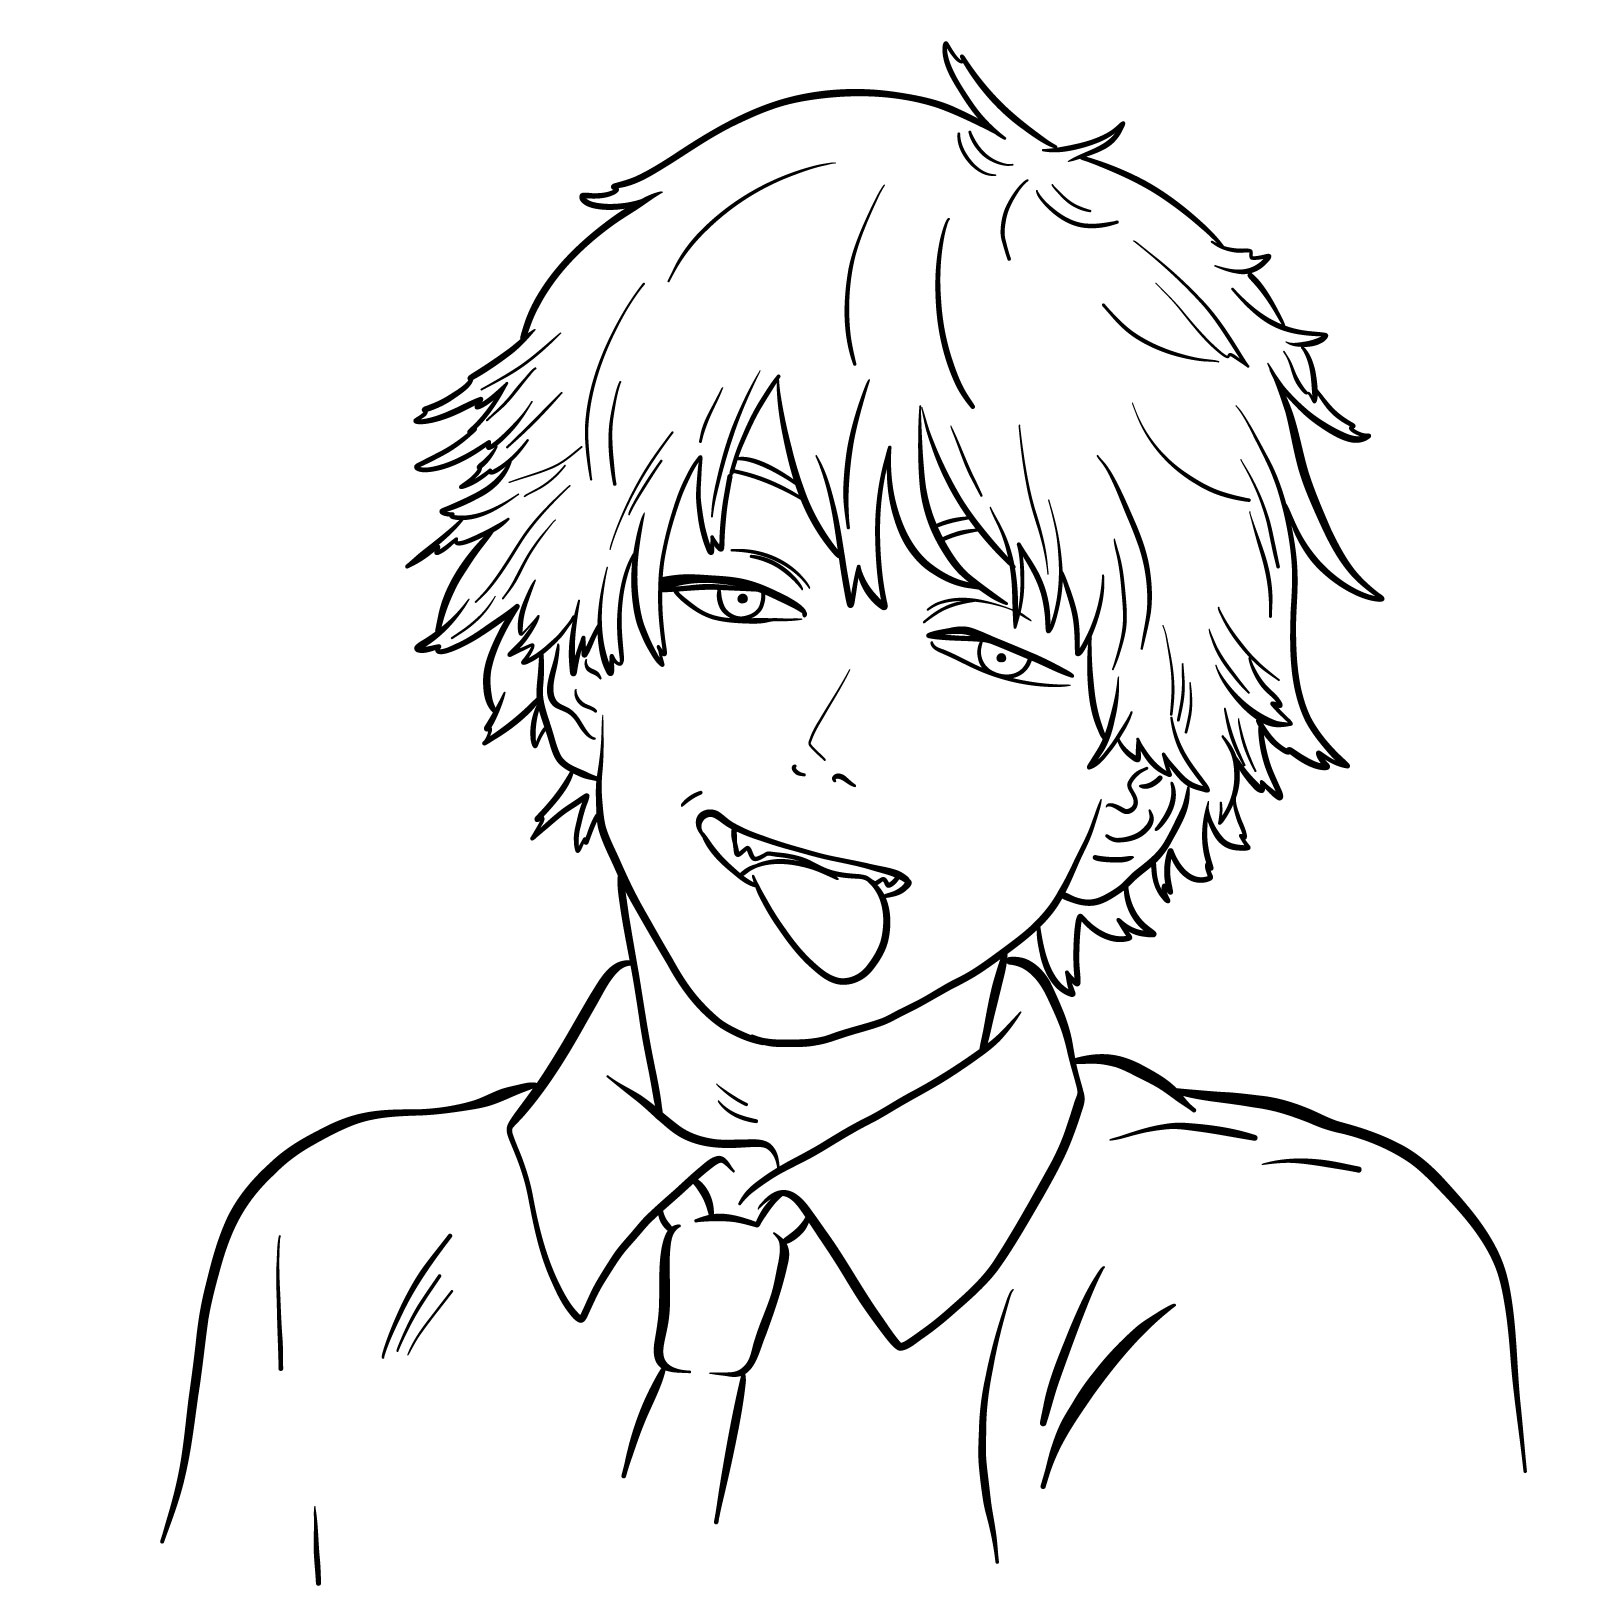 How to draw Denji's face (manga) - final step